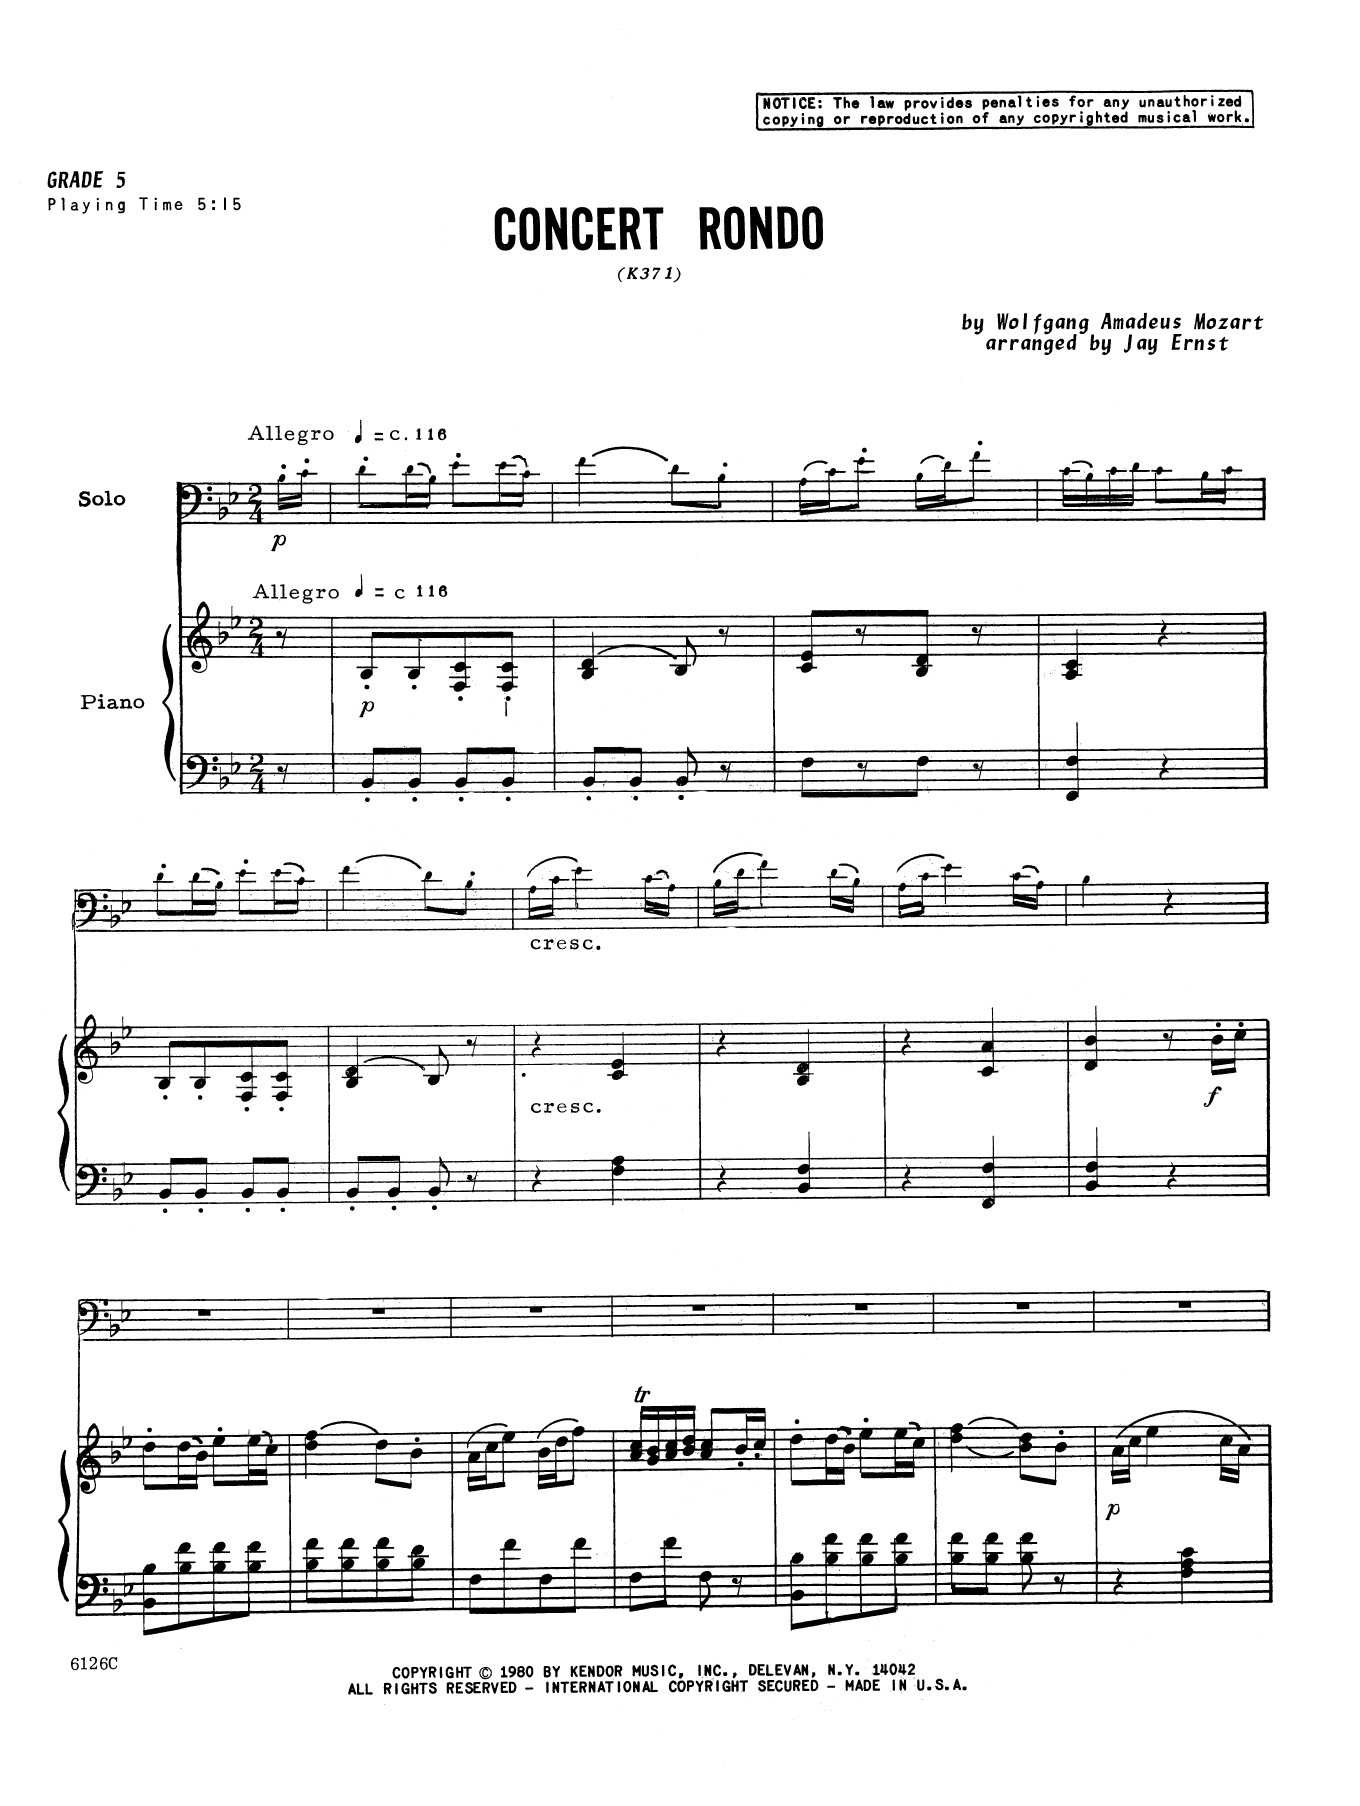 Download Ernst Concert Rondo (K371) - Piano Sheet Music